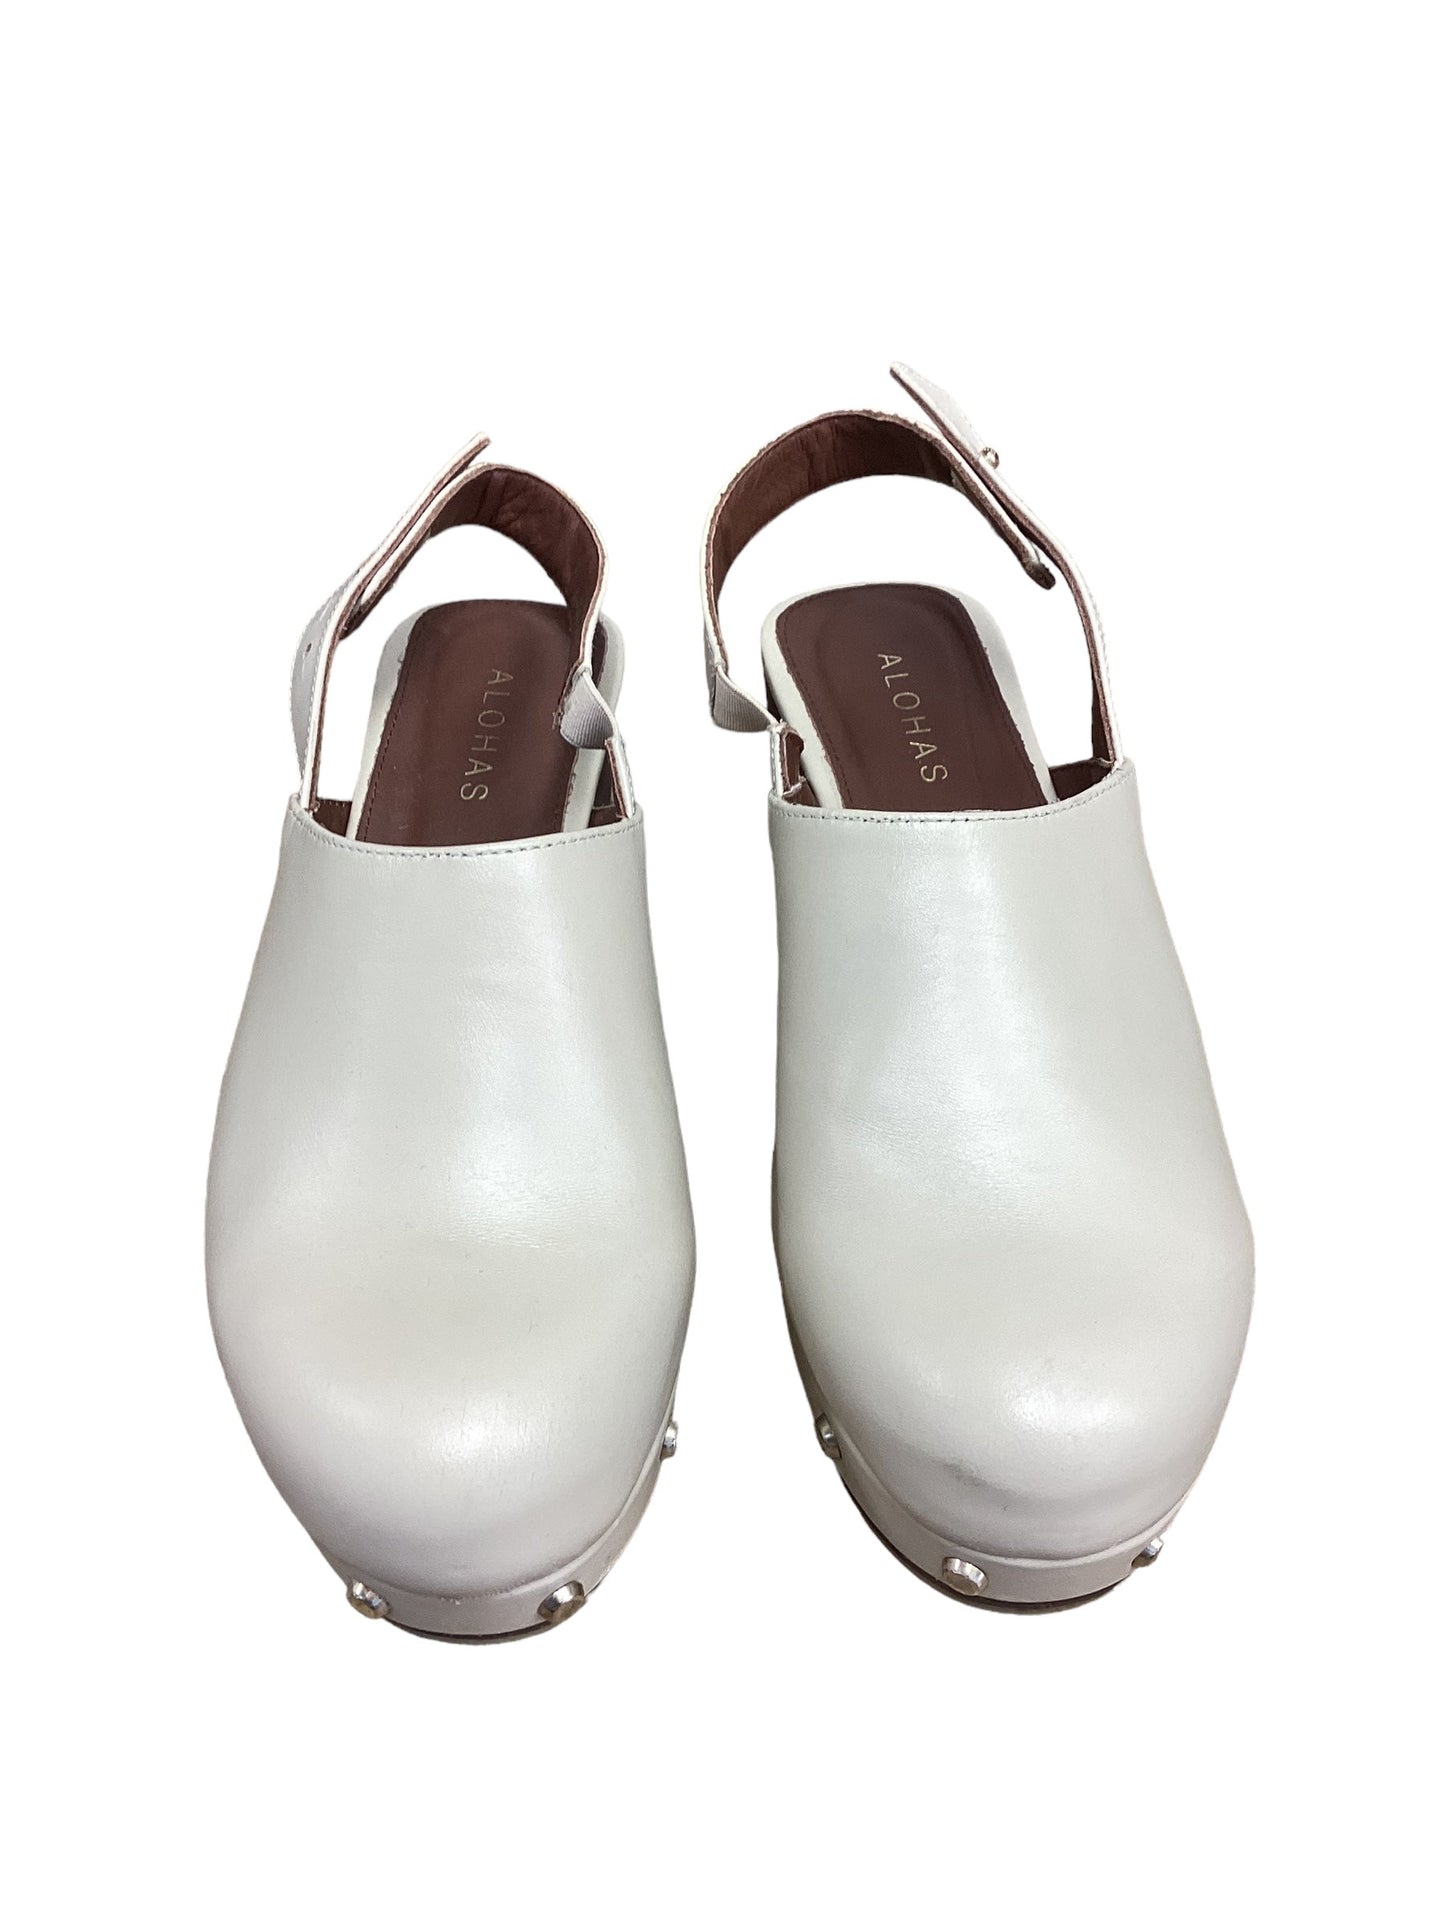 Cream Shoes Heels Block Cma, Size 7.5